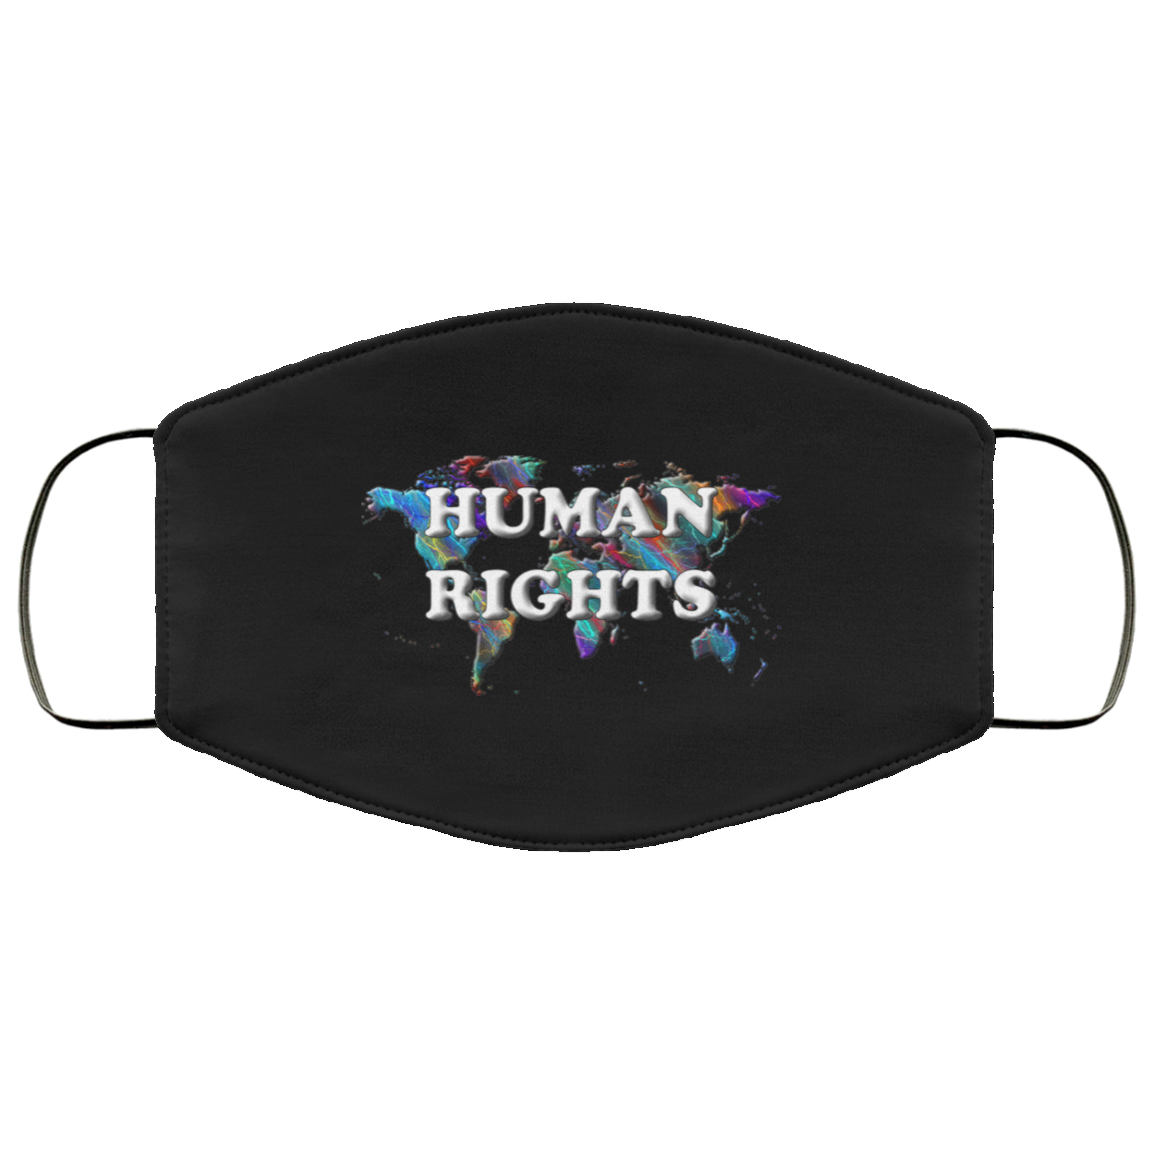 Human Rights 2 Layer Protective Mask